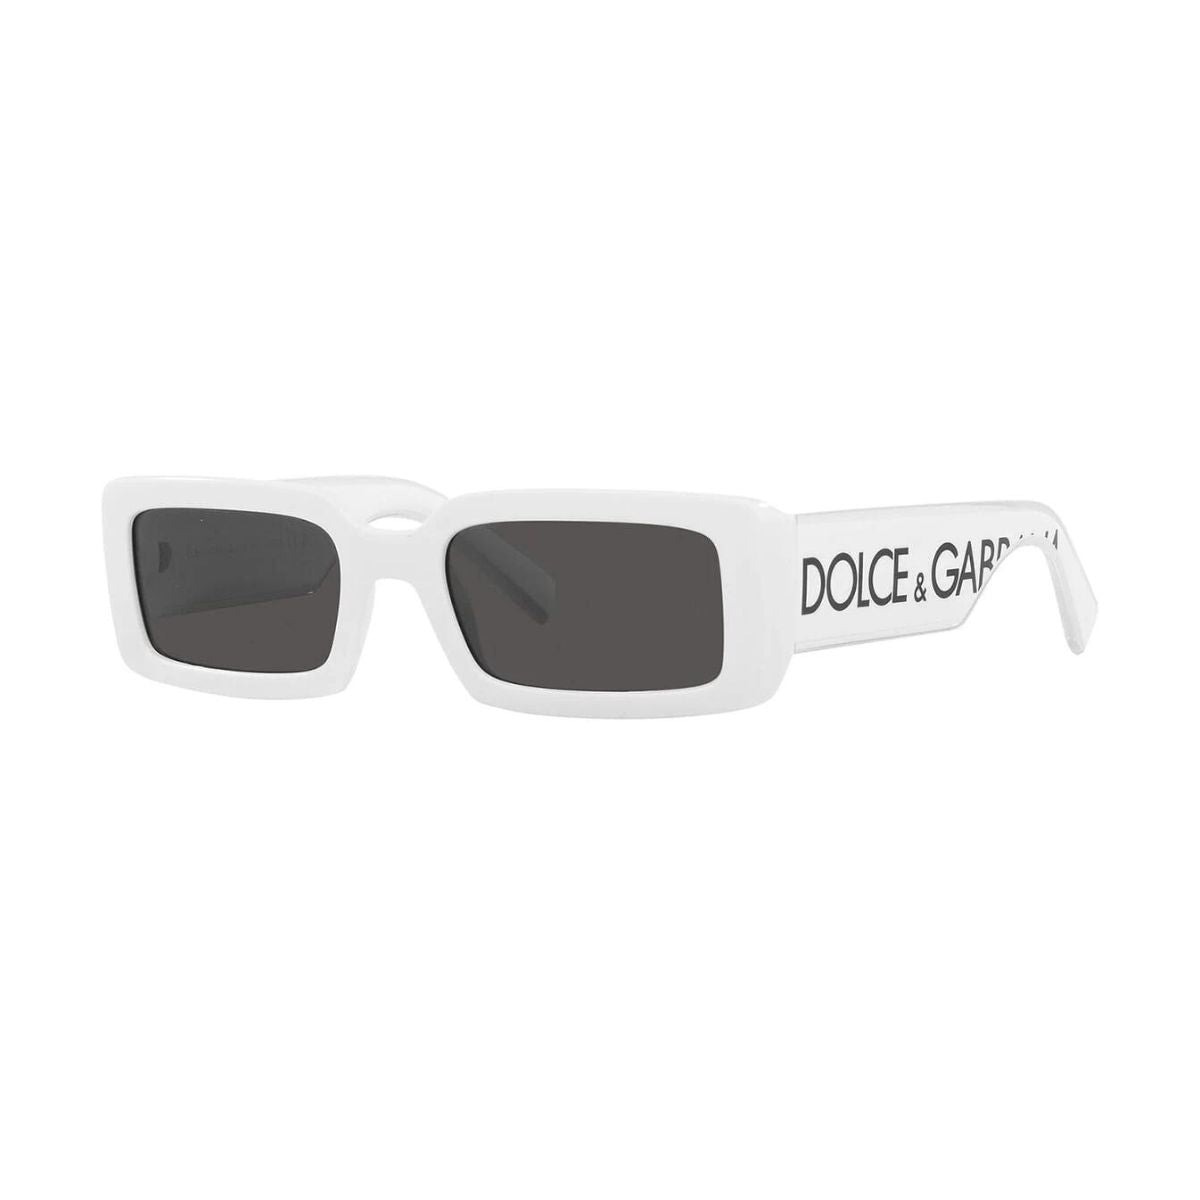 "dolce & gabbna DG6187 3312/87 sunglass UV protection, rectangular frame, white color, suitable for both men and women."